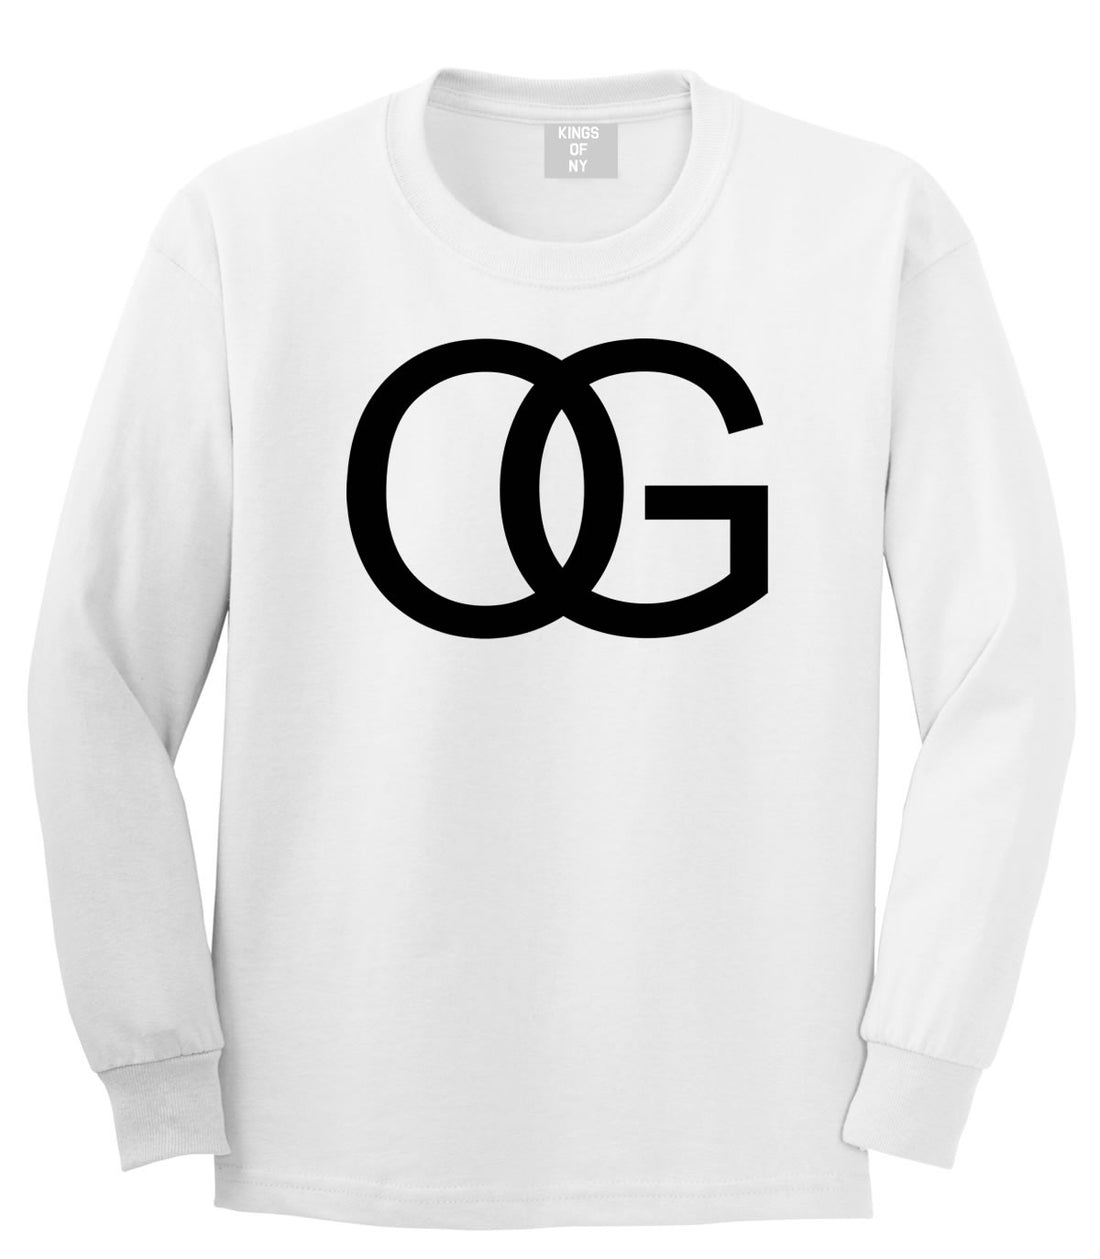 OG Original Gangsta Gangster Style Green Long Sleeve T-Shirt in White by Kings Of NY